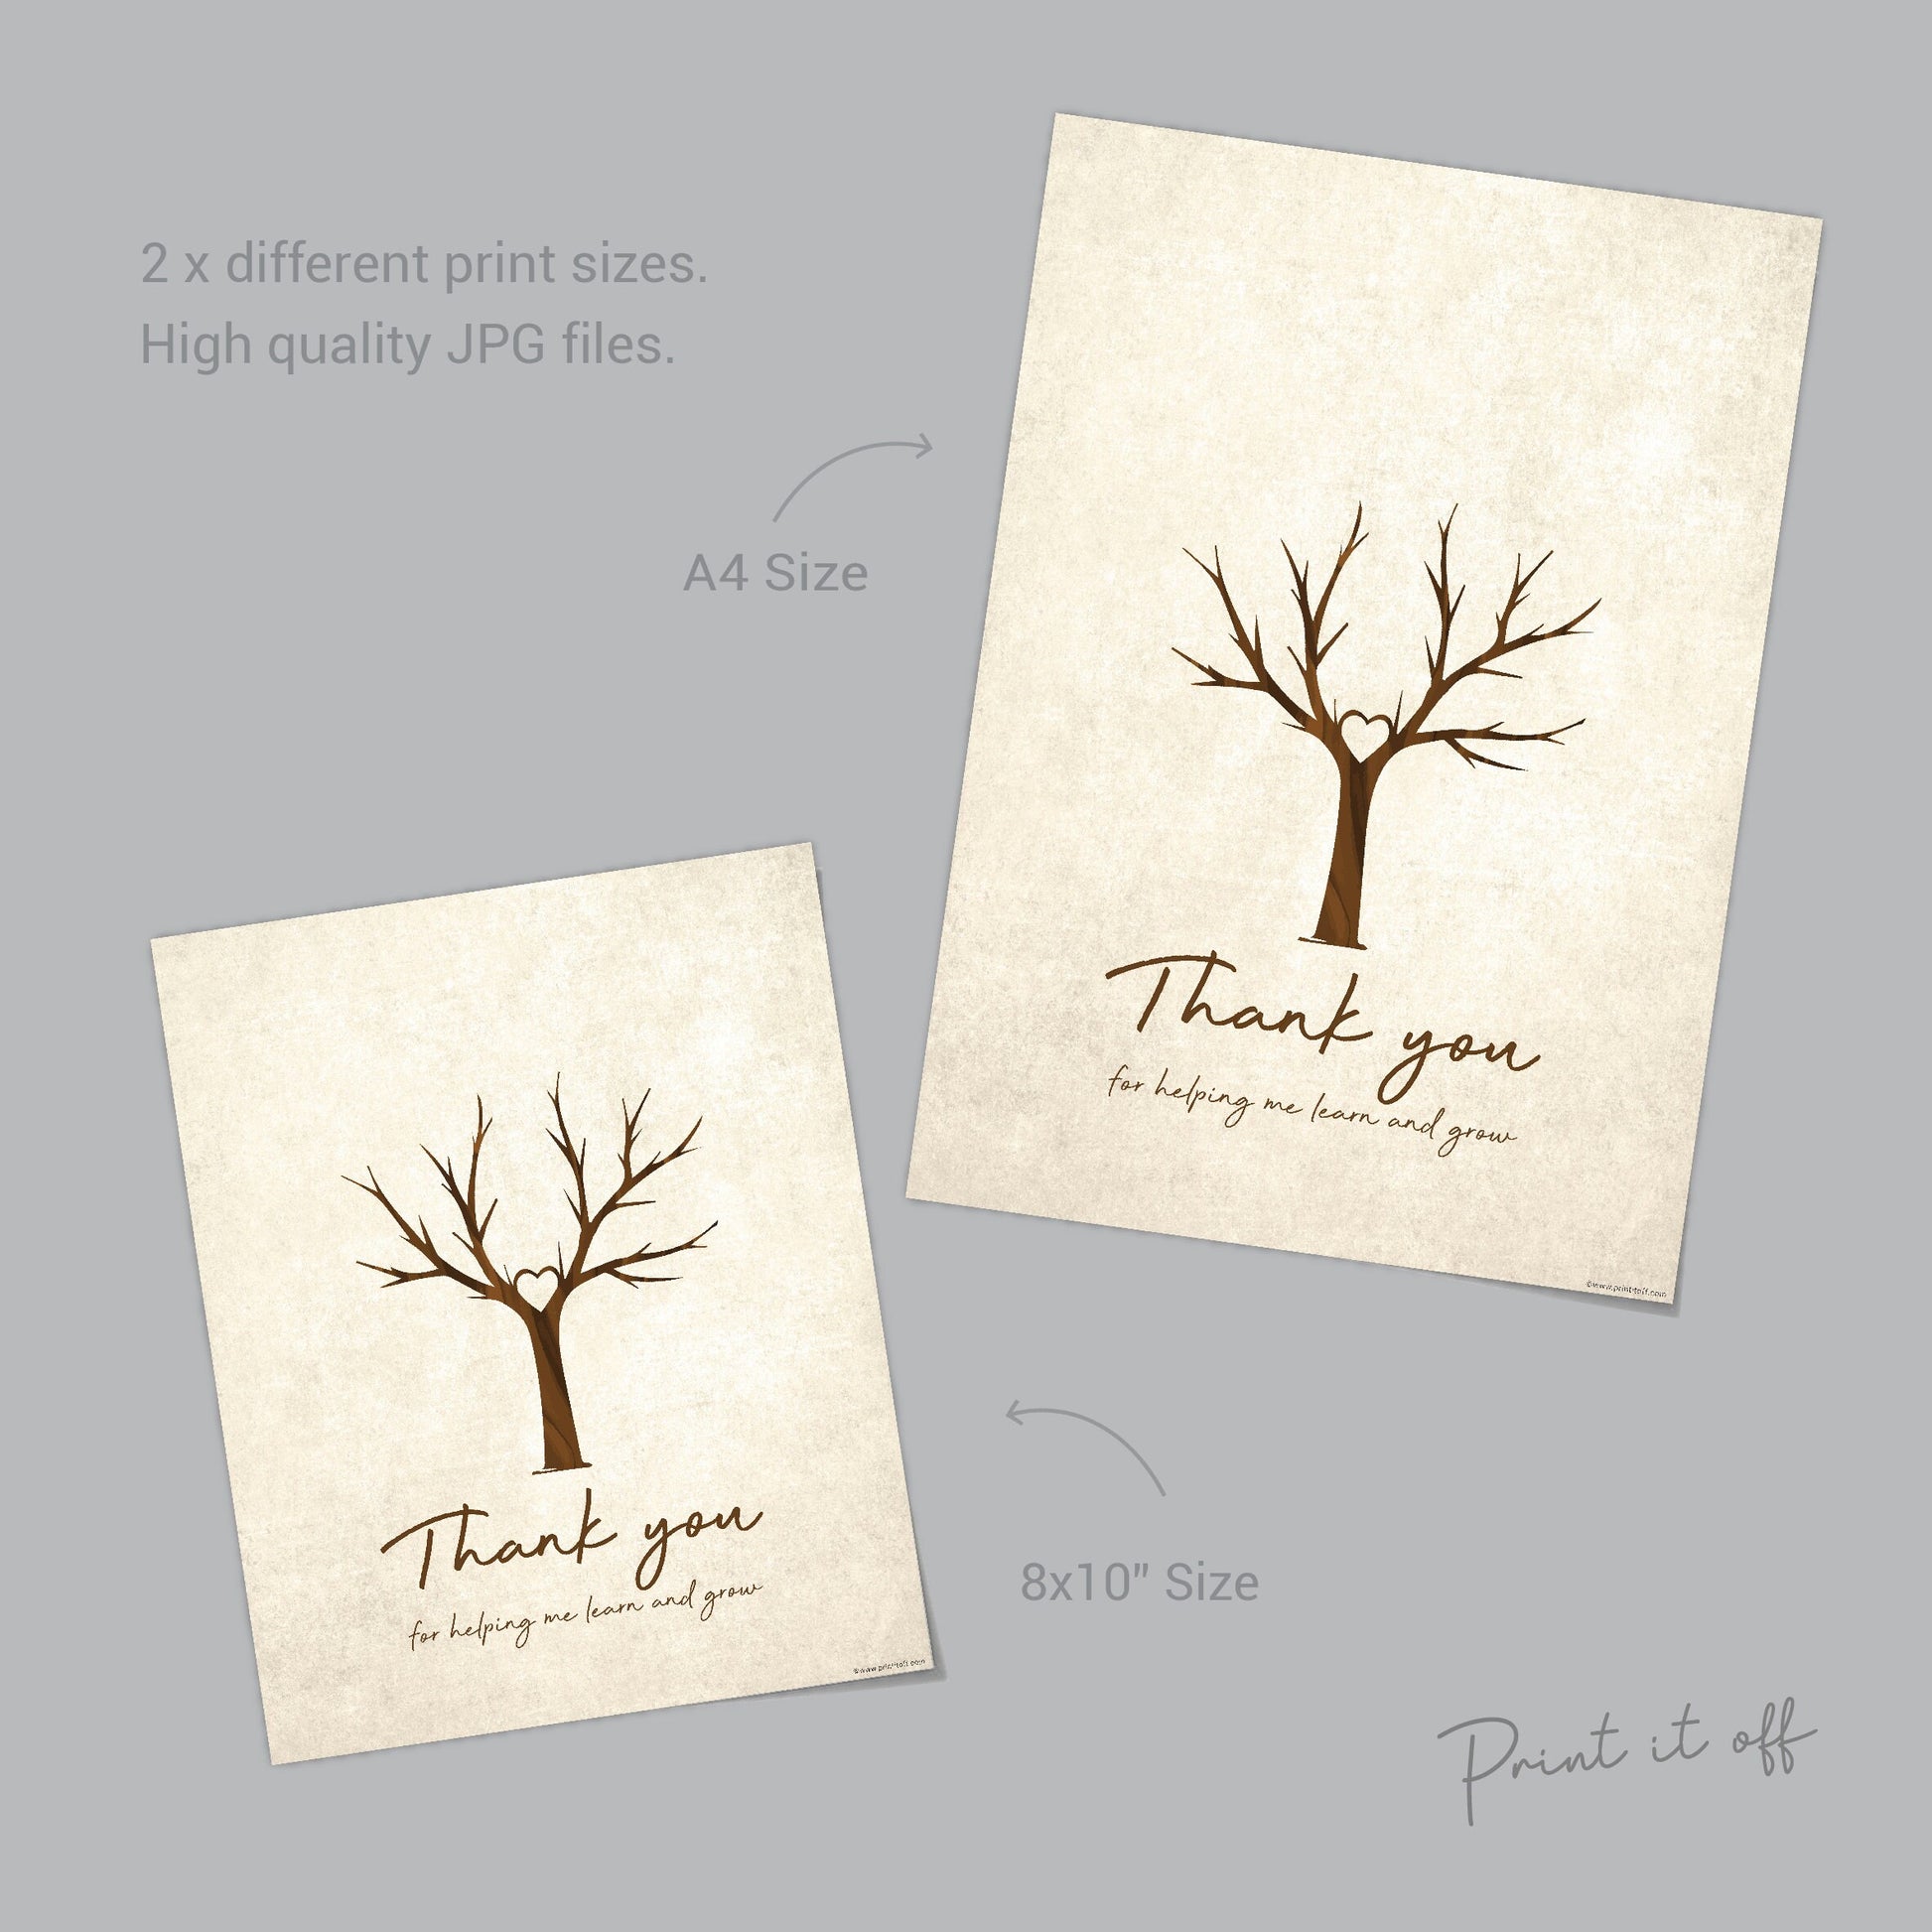 Thank You For Helping Me Learn And Grow / Handprint Art Tree / Kids Baby Toddler / Teacher Appreciation Gift / Keepsake Craft DIY Card Print